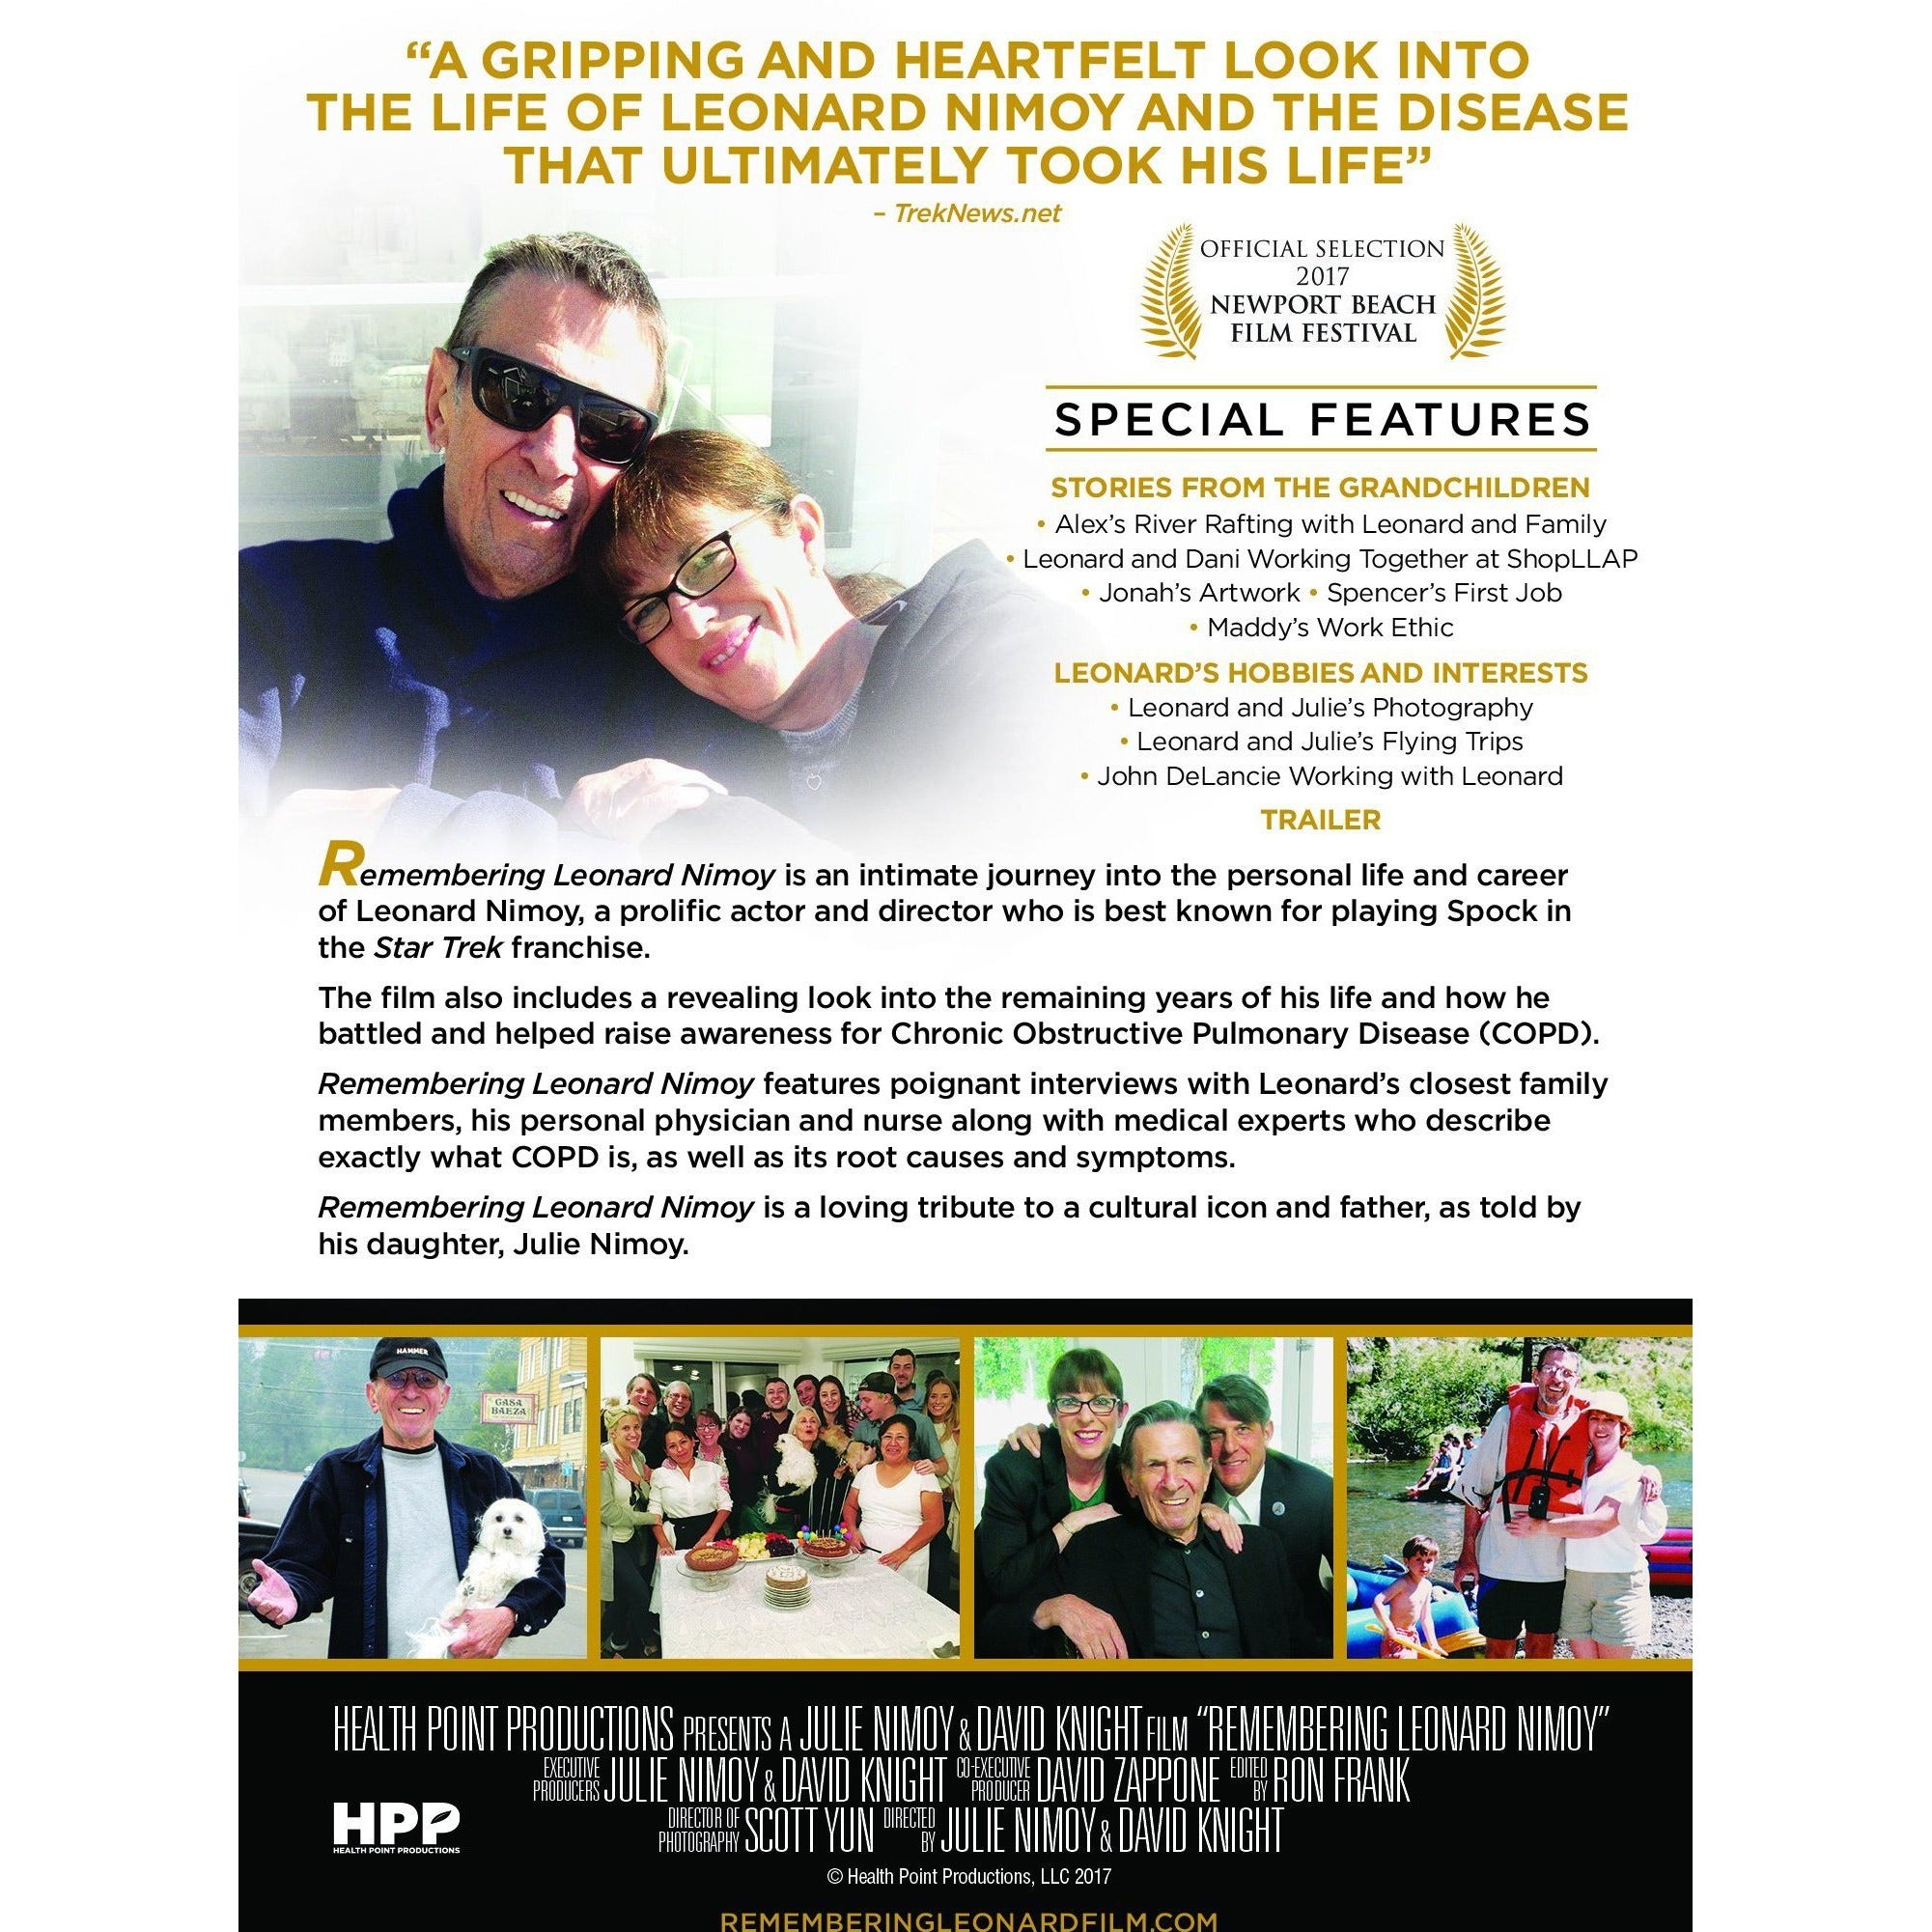 Remembering Leonard Nimoy - DVD - Special Director’s Edition - Leonard Nimoy's Shop LLAP